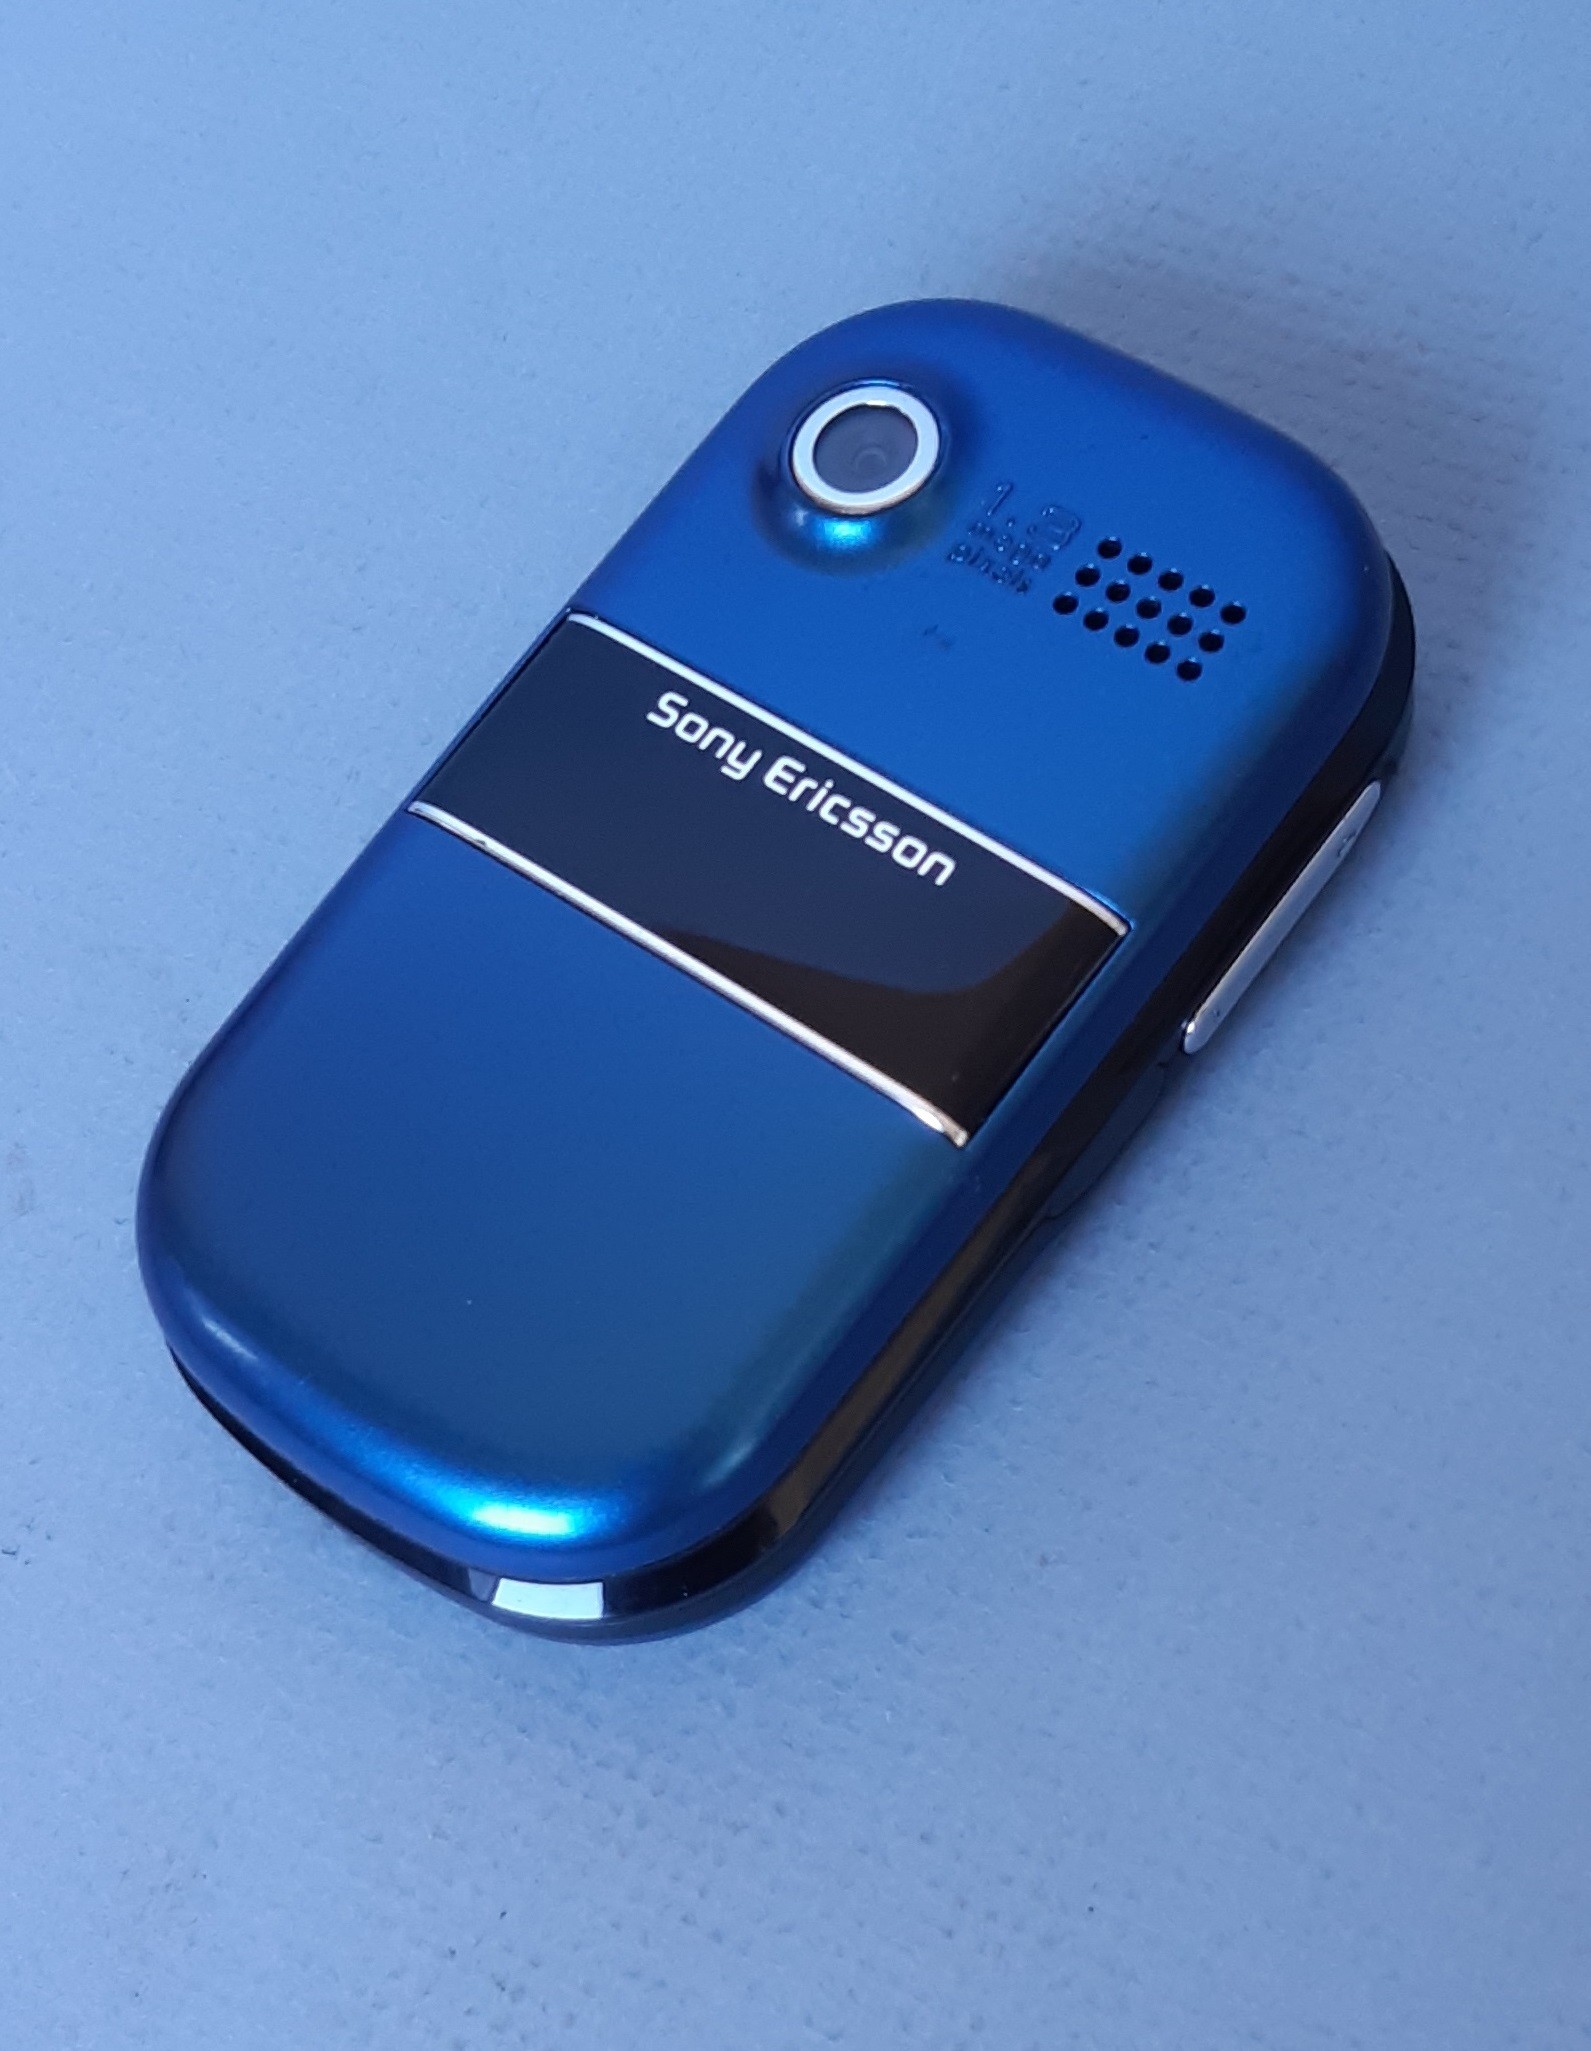 Sony Ericsson mobiltelefon Z320i (Postamúzeum CC BY-NC-SA)